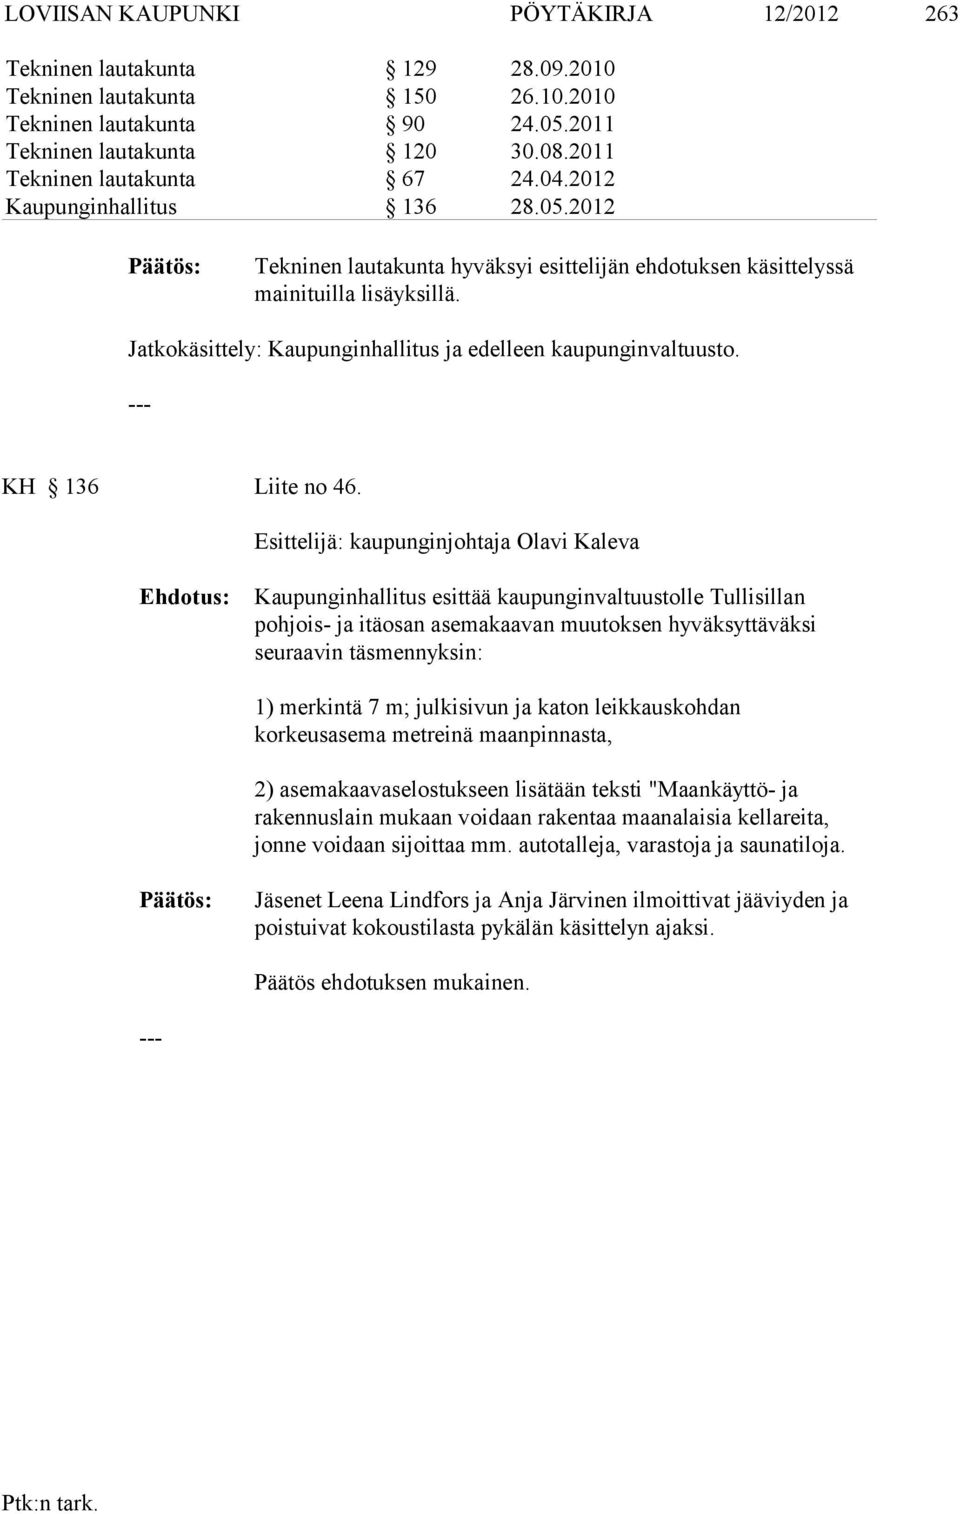 Jatkokäsittely: Kaupunginhallitus ja edelleen kaupunginvaltuusto. KH 136 Liite no 46.